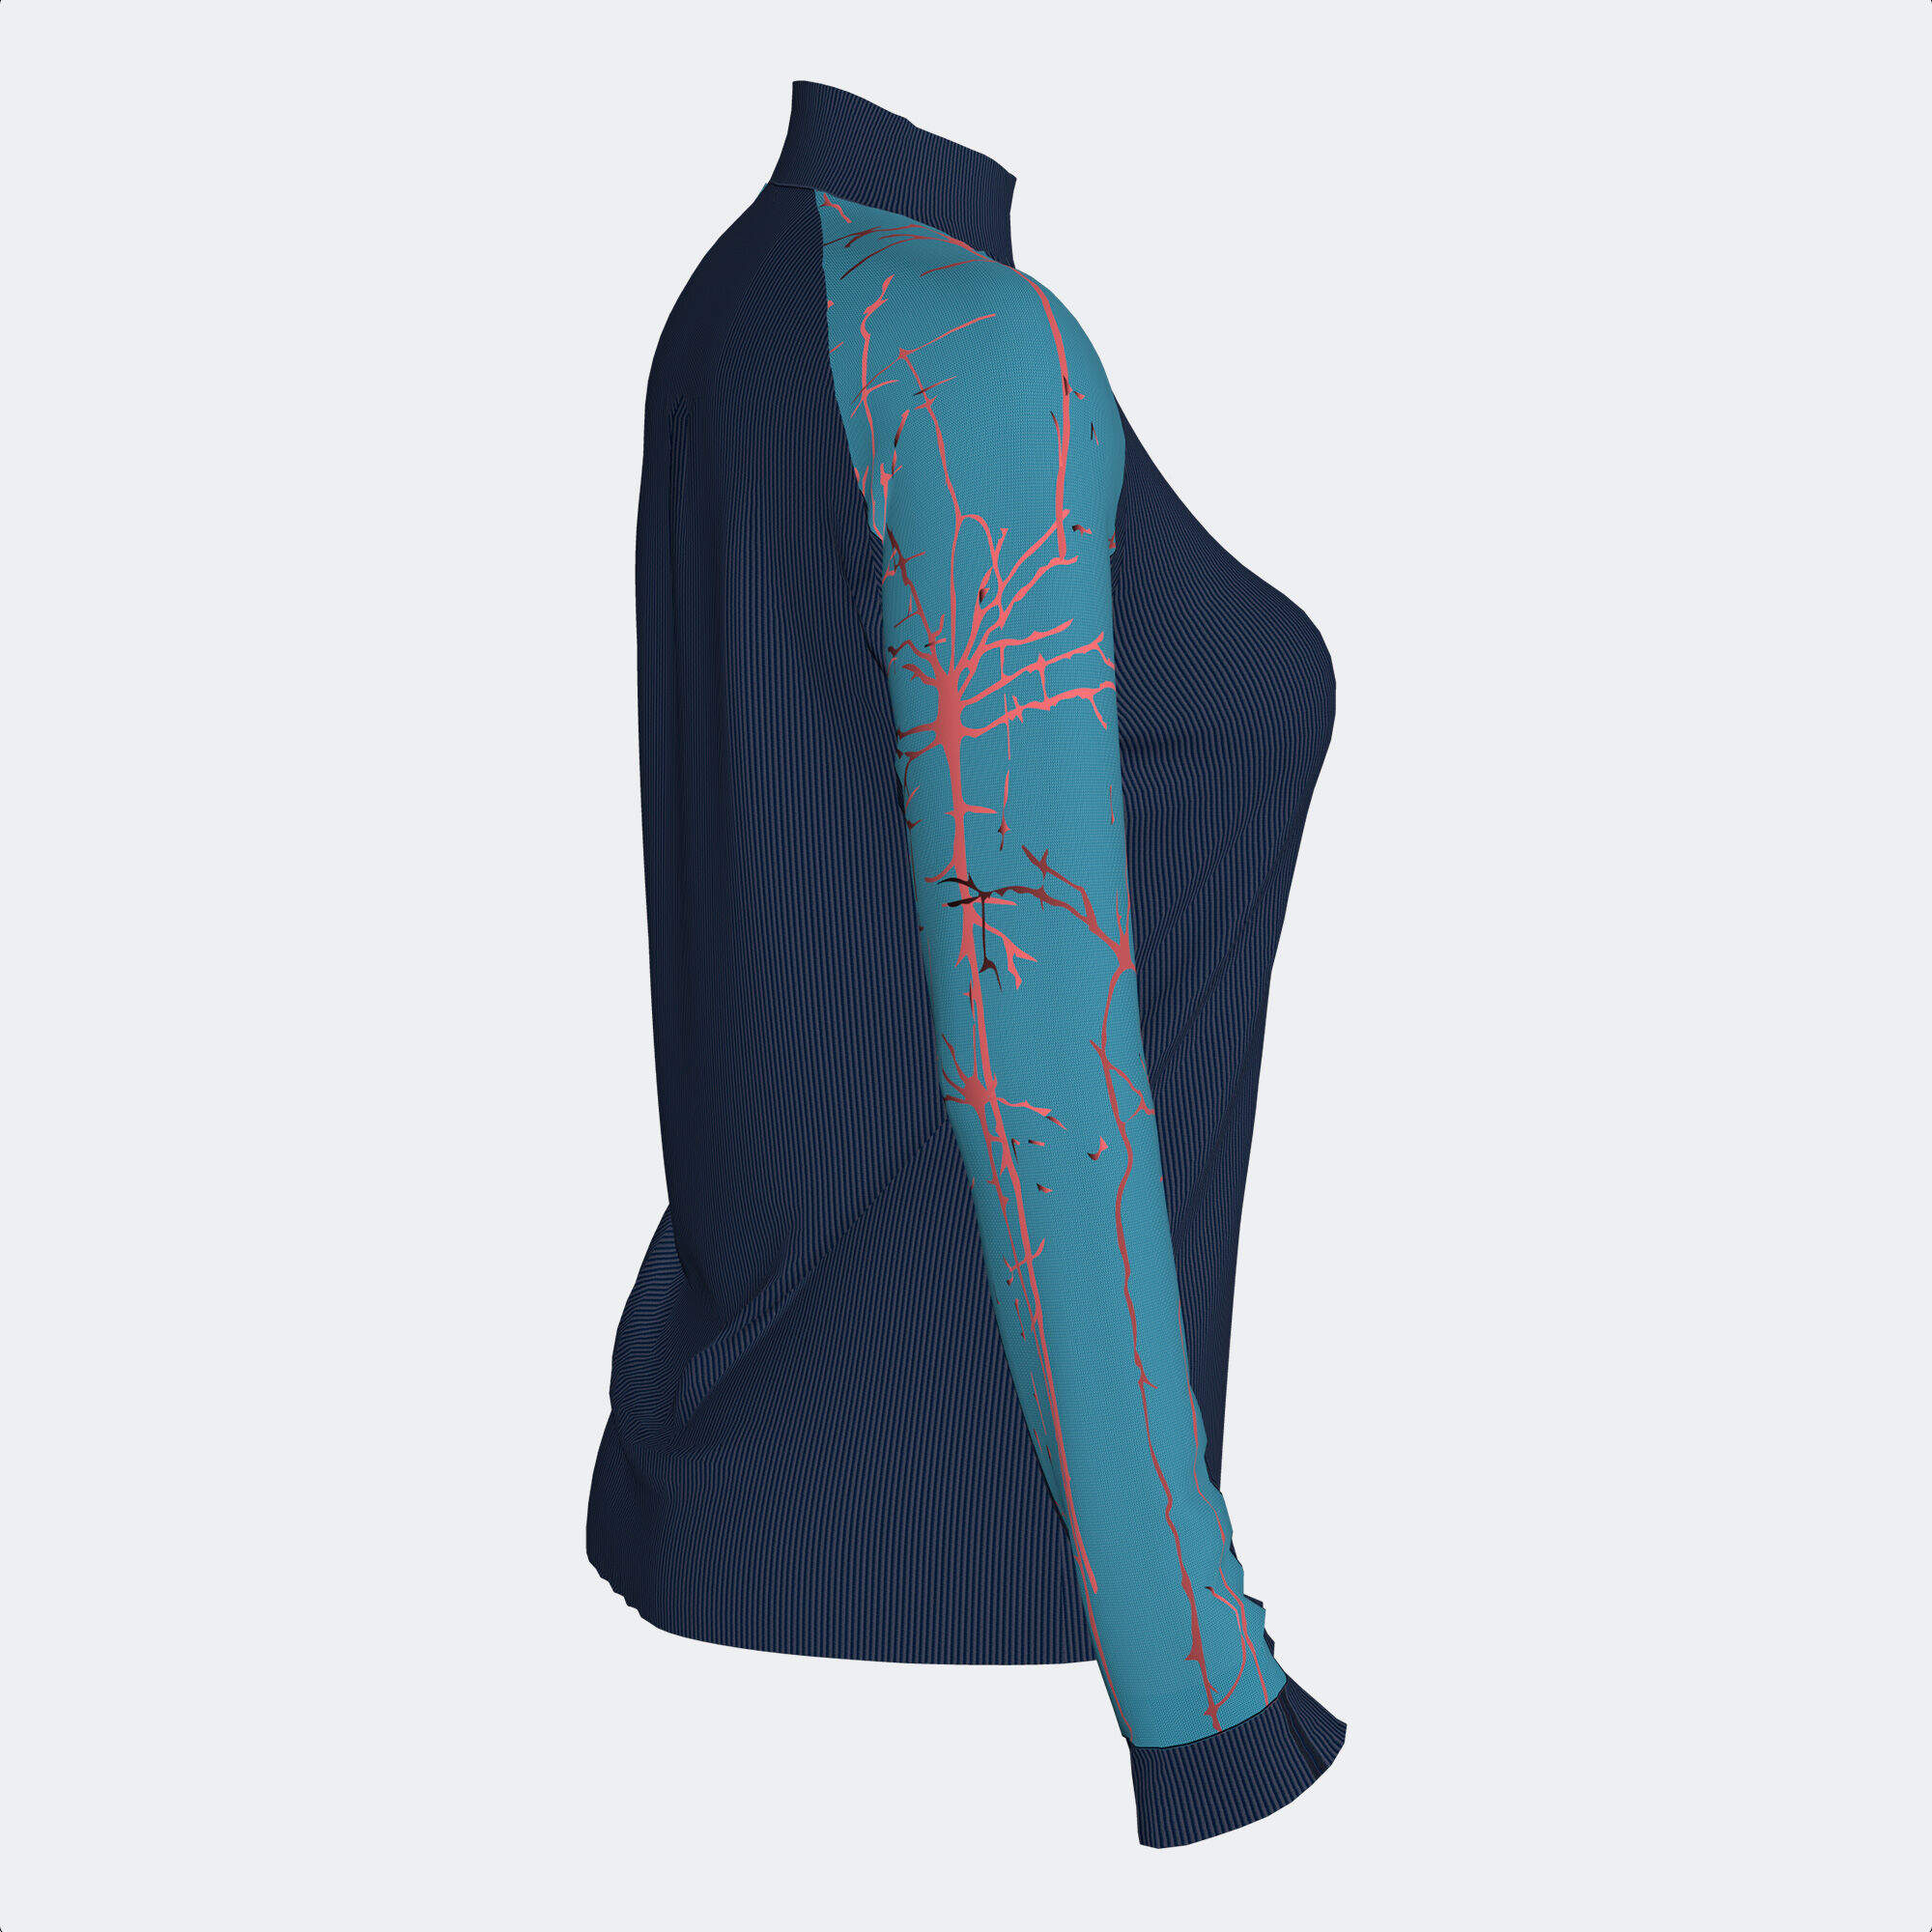 Sweat-shirt femme Elite IX bleu marine turquoise